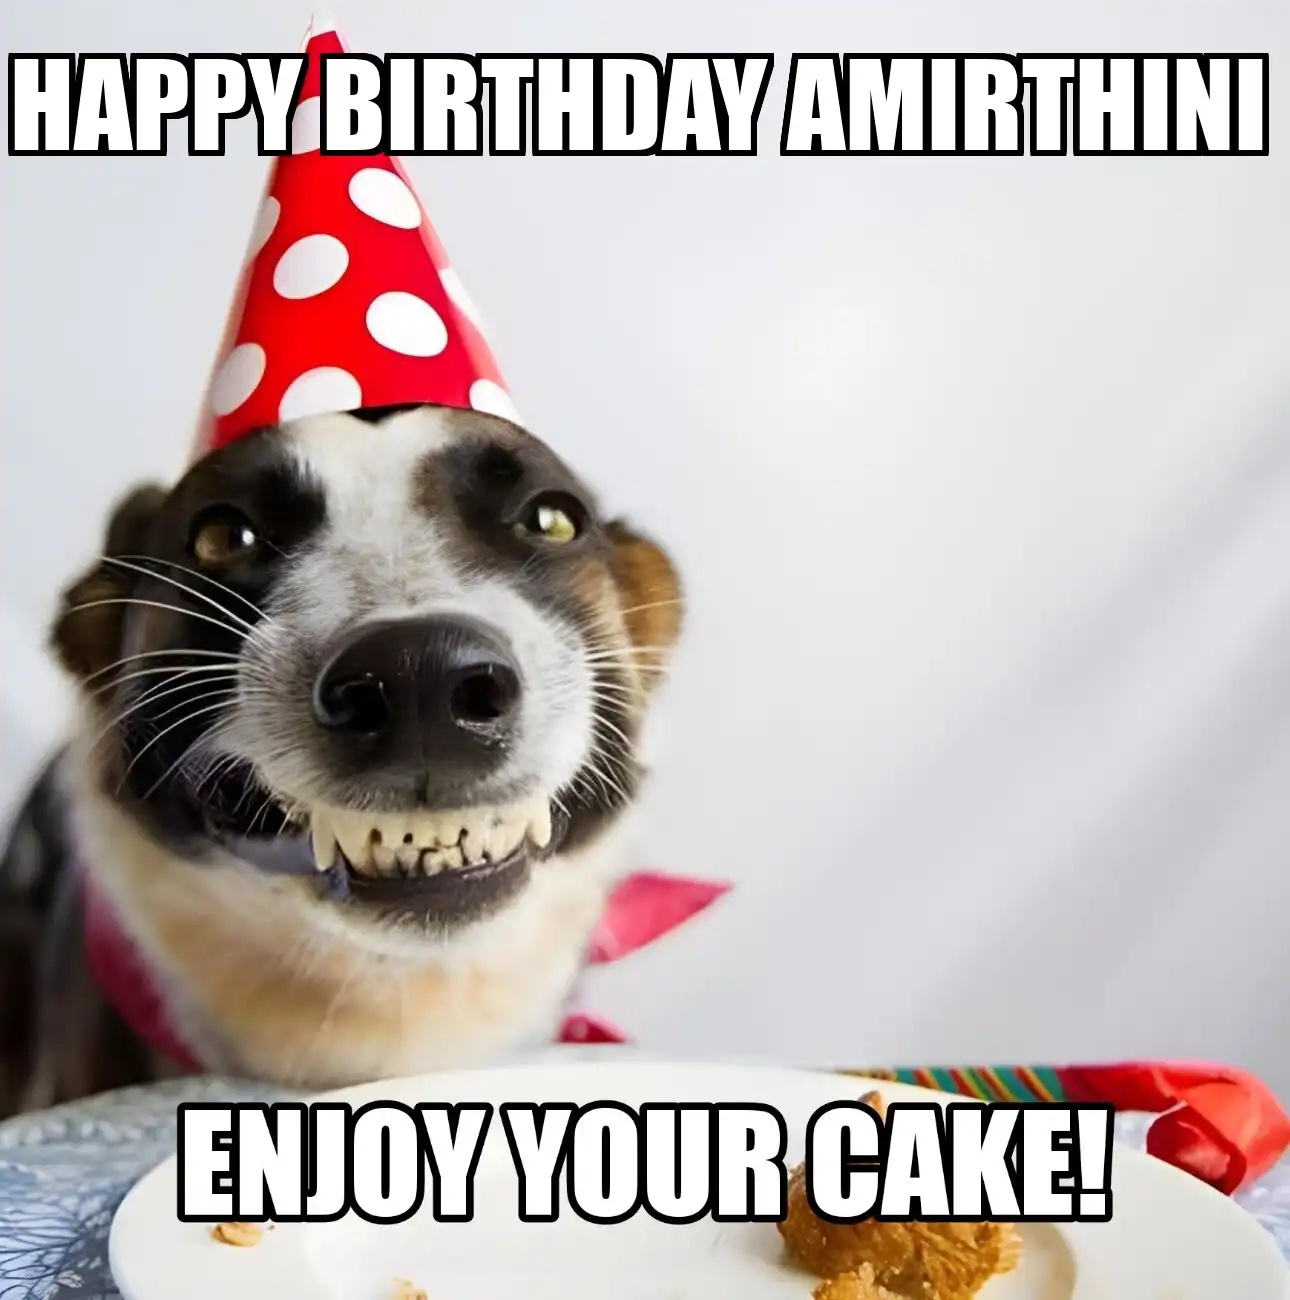 Happy Birthday Amirthini Enjoy Your Cake Dog Meme